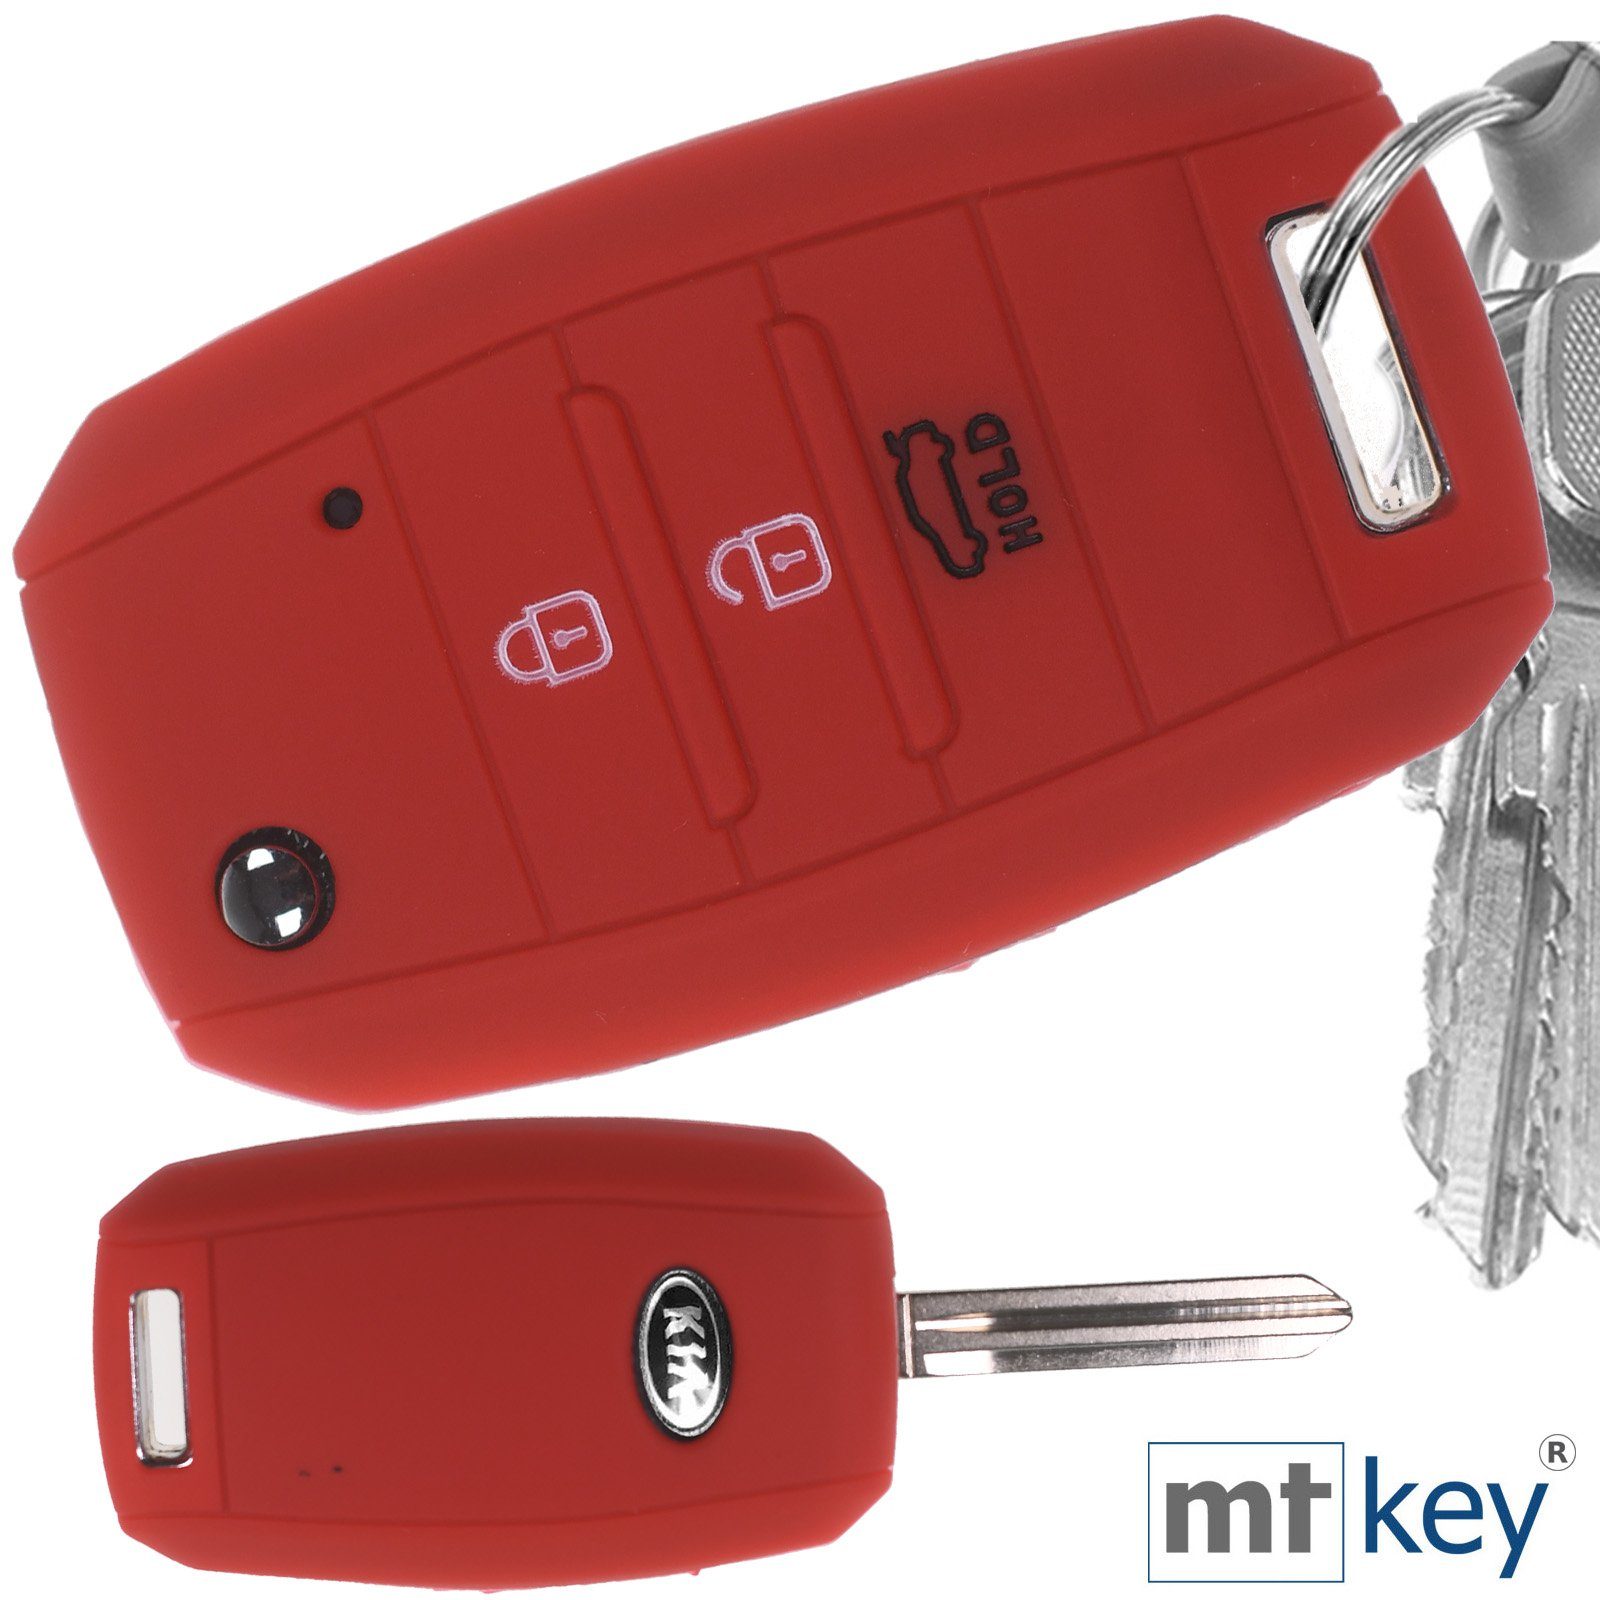 mt-key Schlüsseltasche Autoschlüssel Softcase Schutzhülle Stonic für Tasten Soul mit Rio Picantio Silikon Carens Rot Schlüsselband, Ceed Sportage 3 KIA